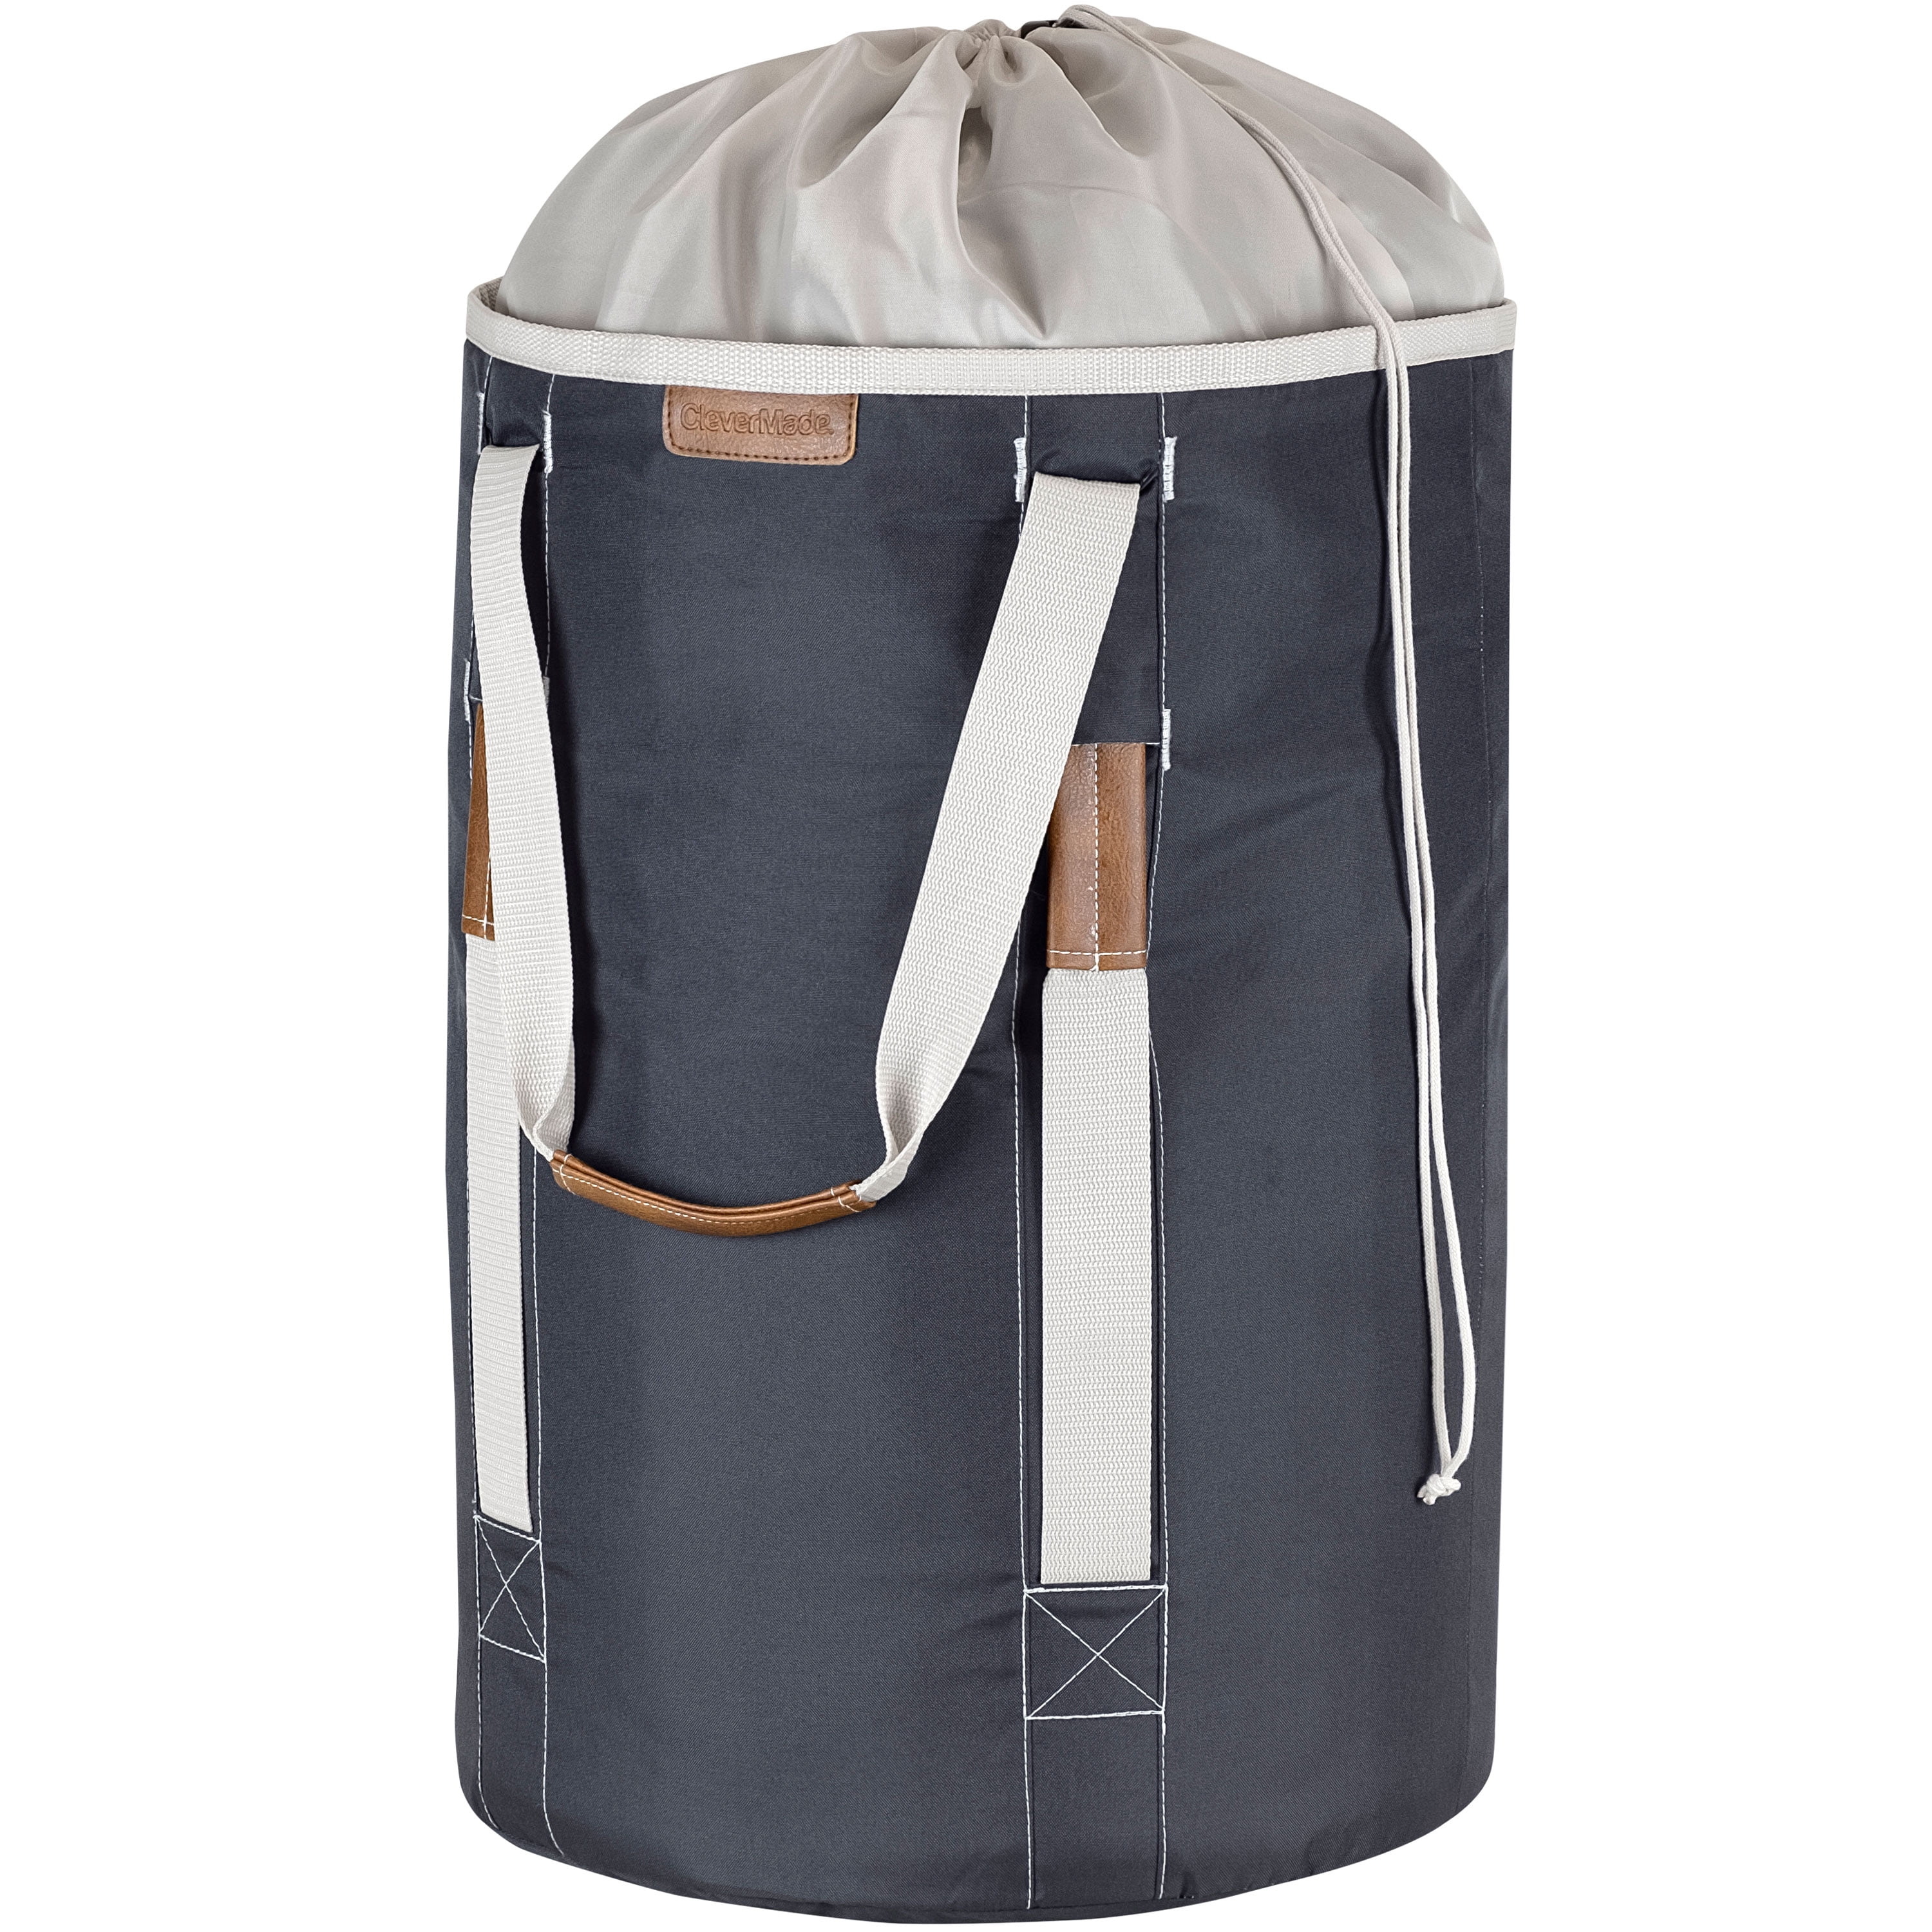 Homz LAUNDRY BAG Carry-All Cloth Tan Canvas 2 Loads Laundry Drawstring 1220219 